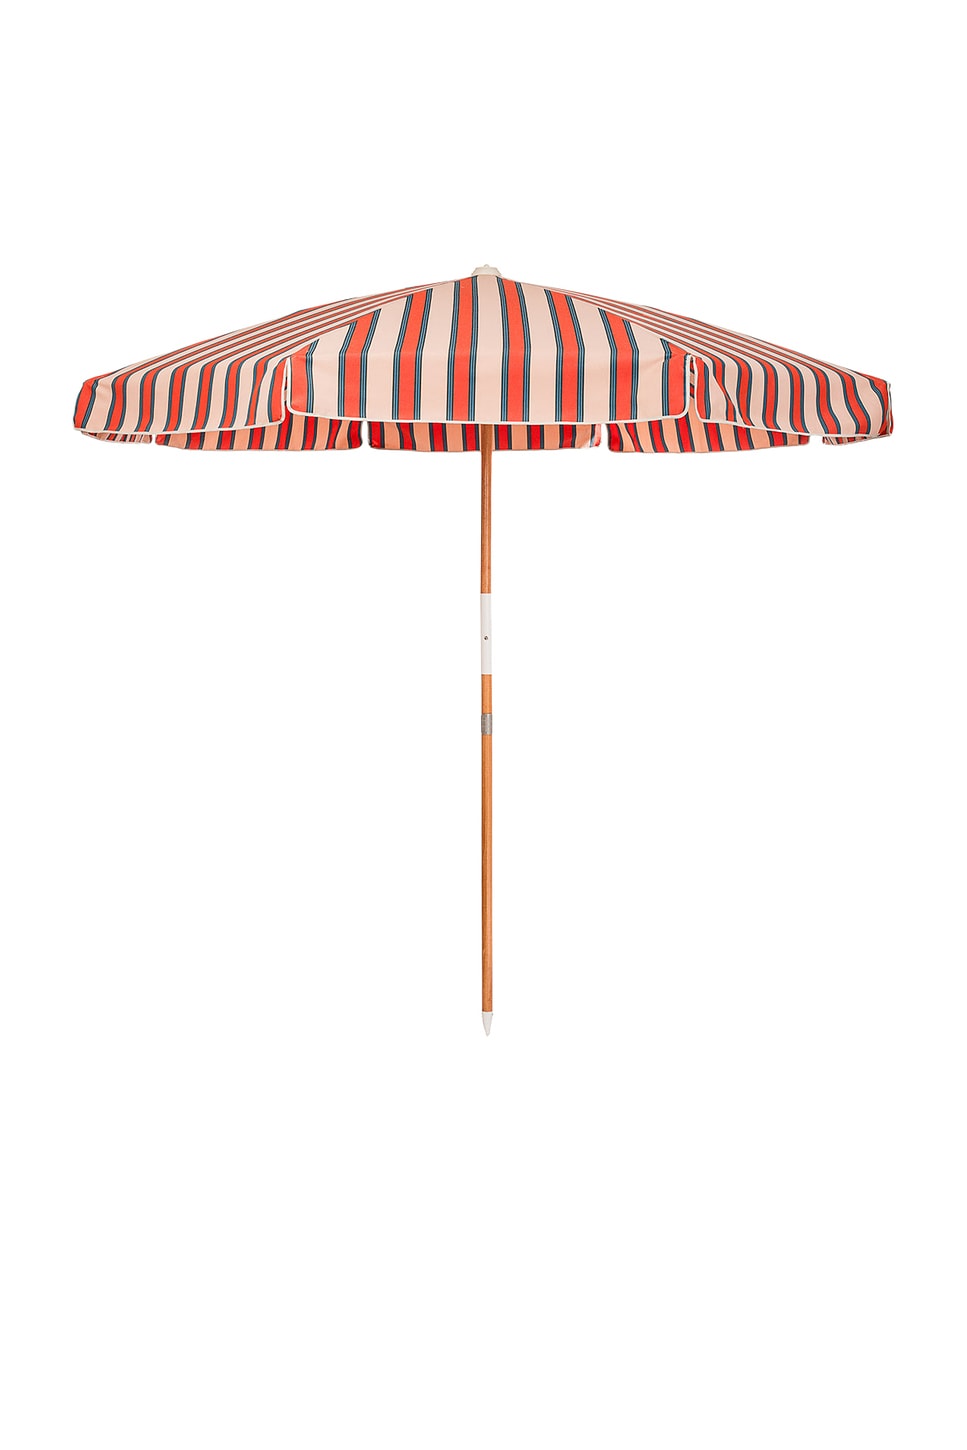 Image 1 of business & pleasure co. Amalfi Umbrella in Bistro Dusty Pink Stripe